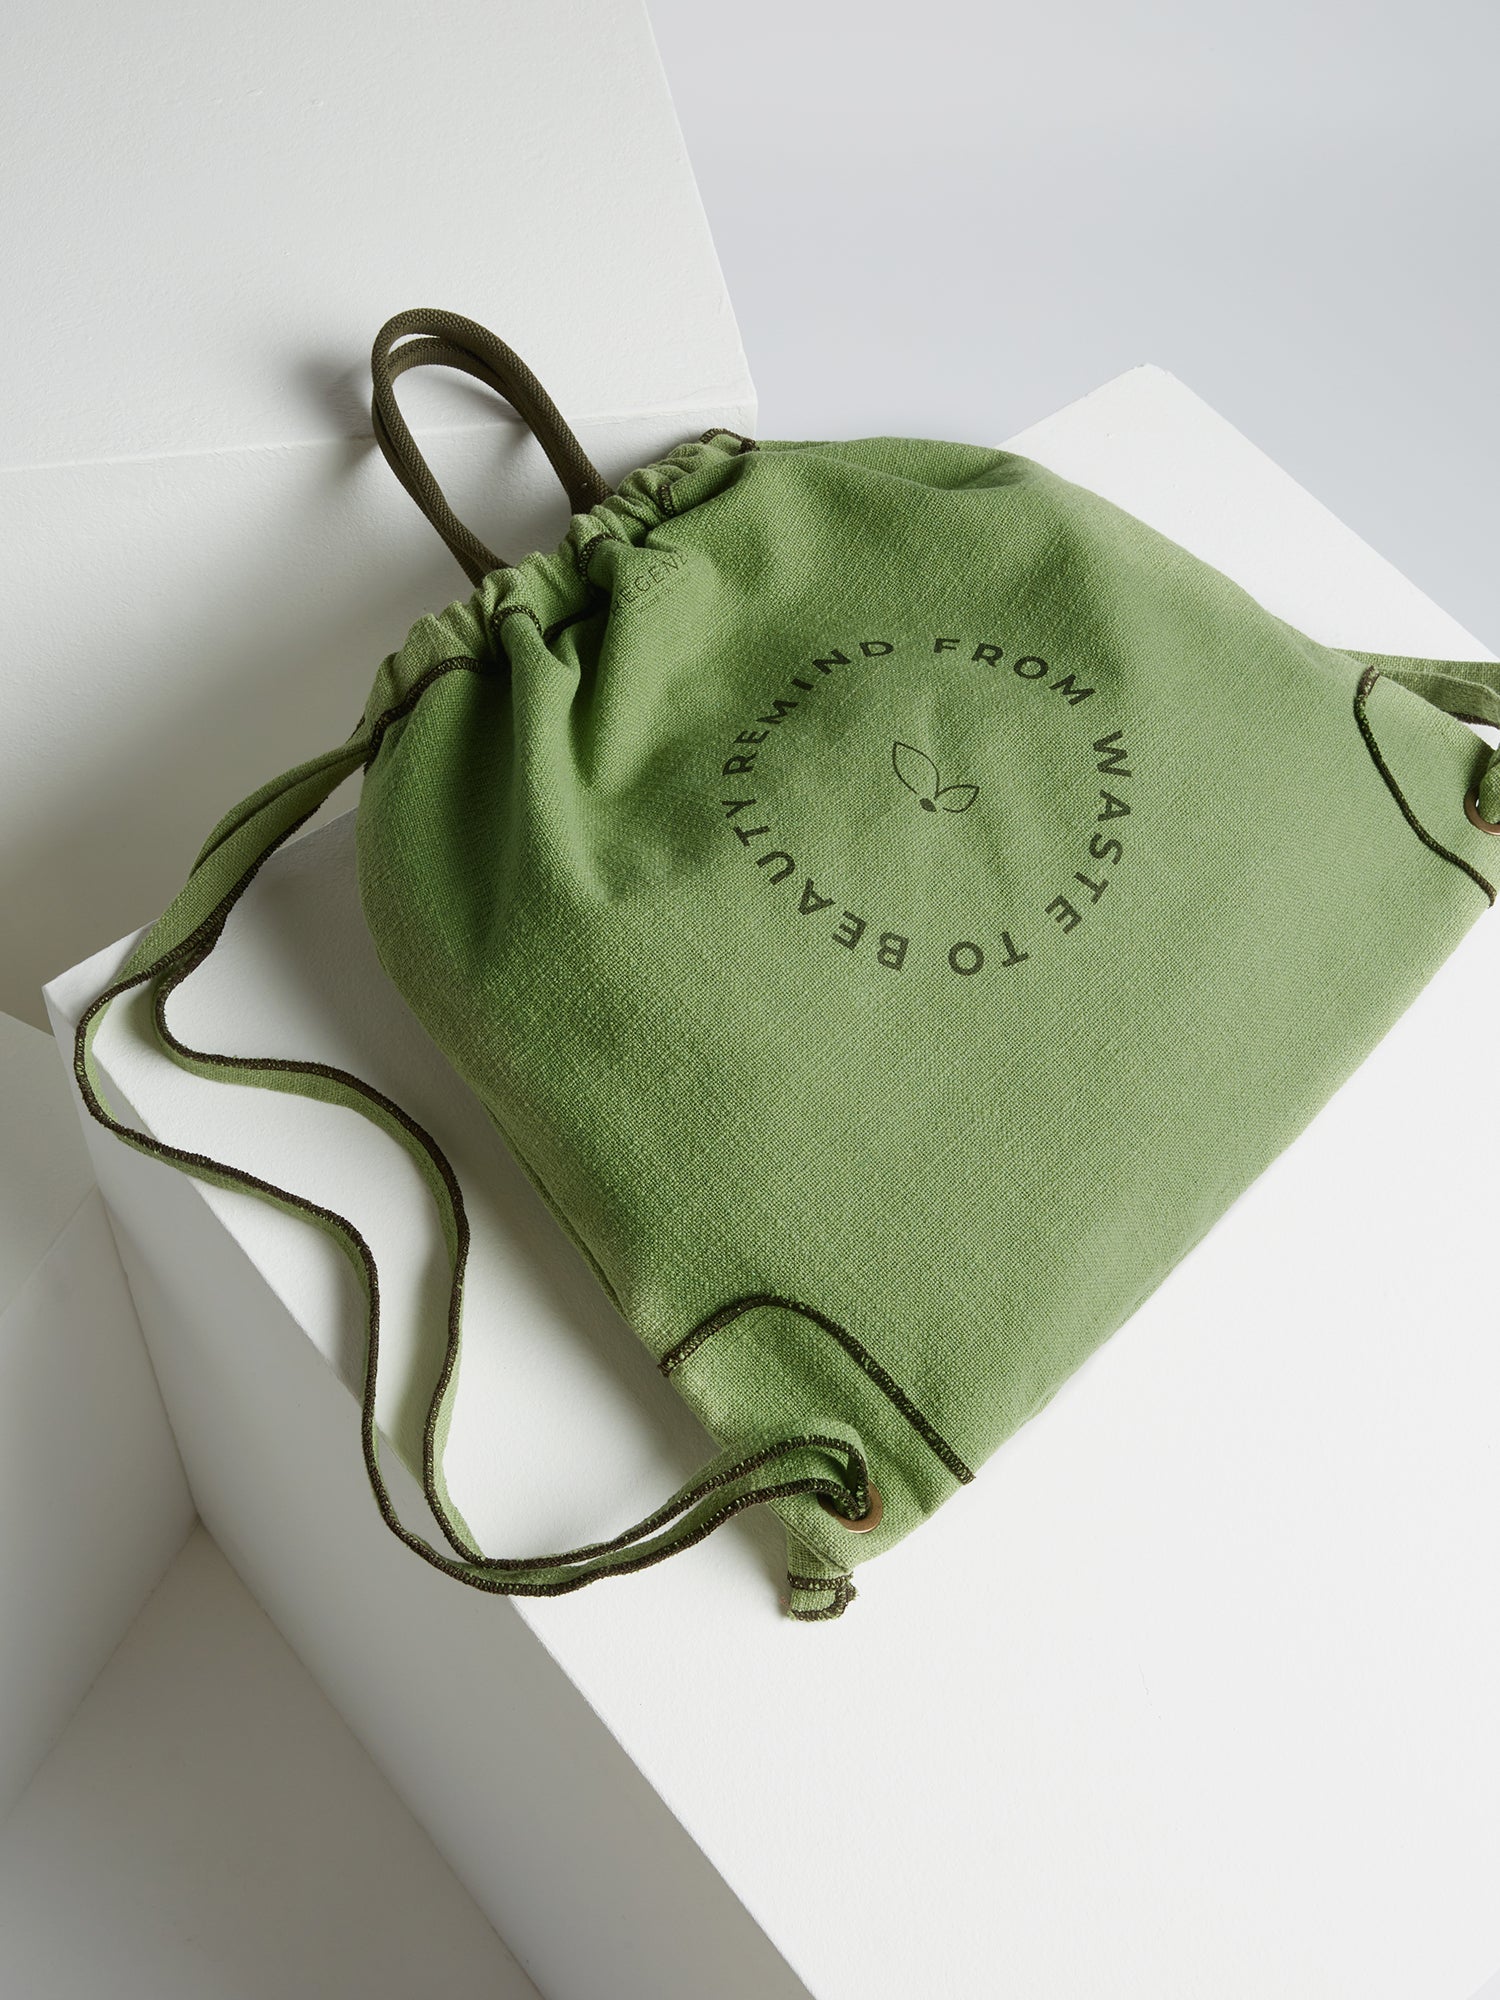 APPLE Store Shopping Bag Backpack White Paper Plastic Bags VINTAGE | eBay